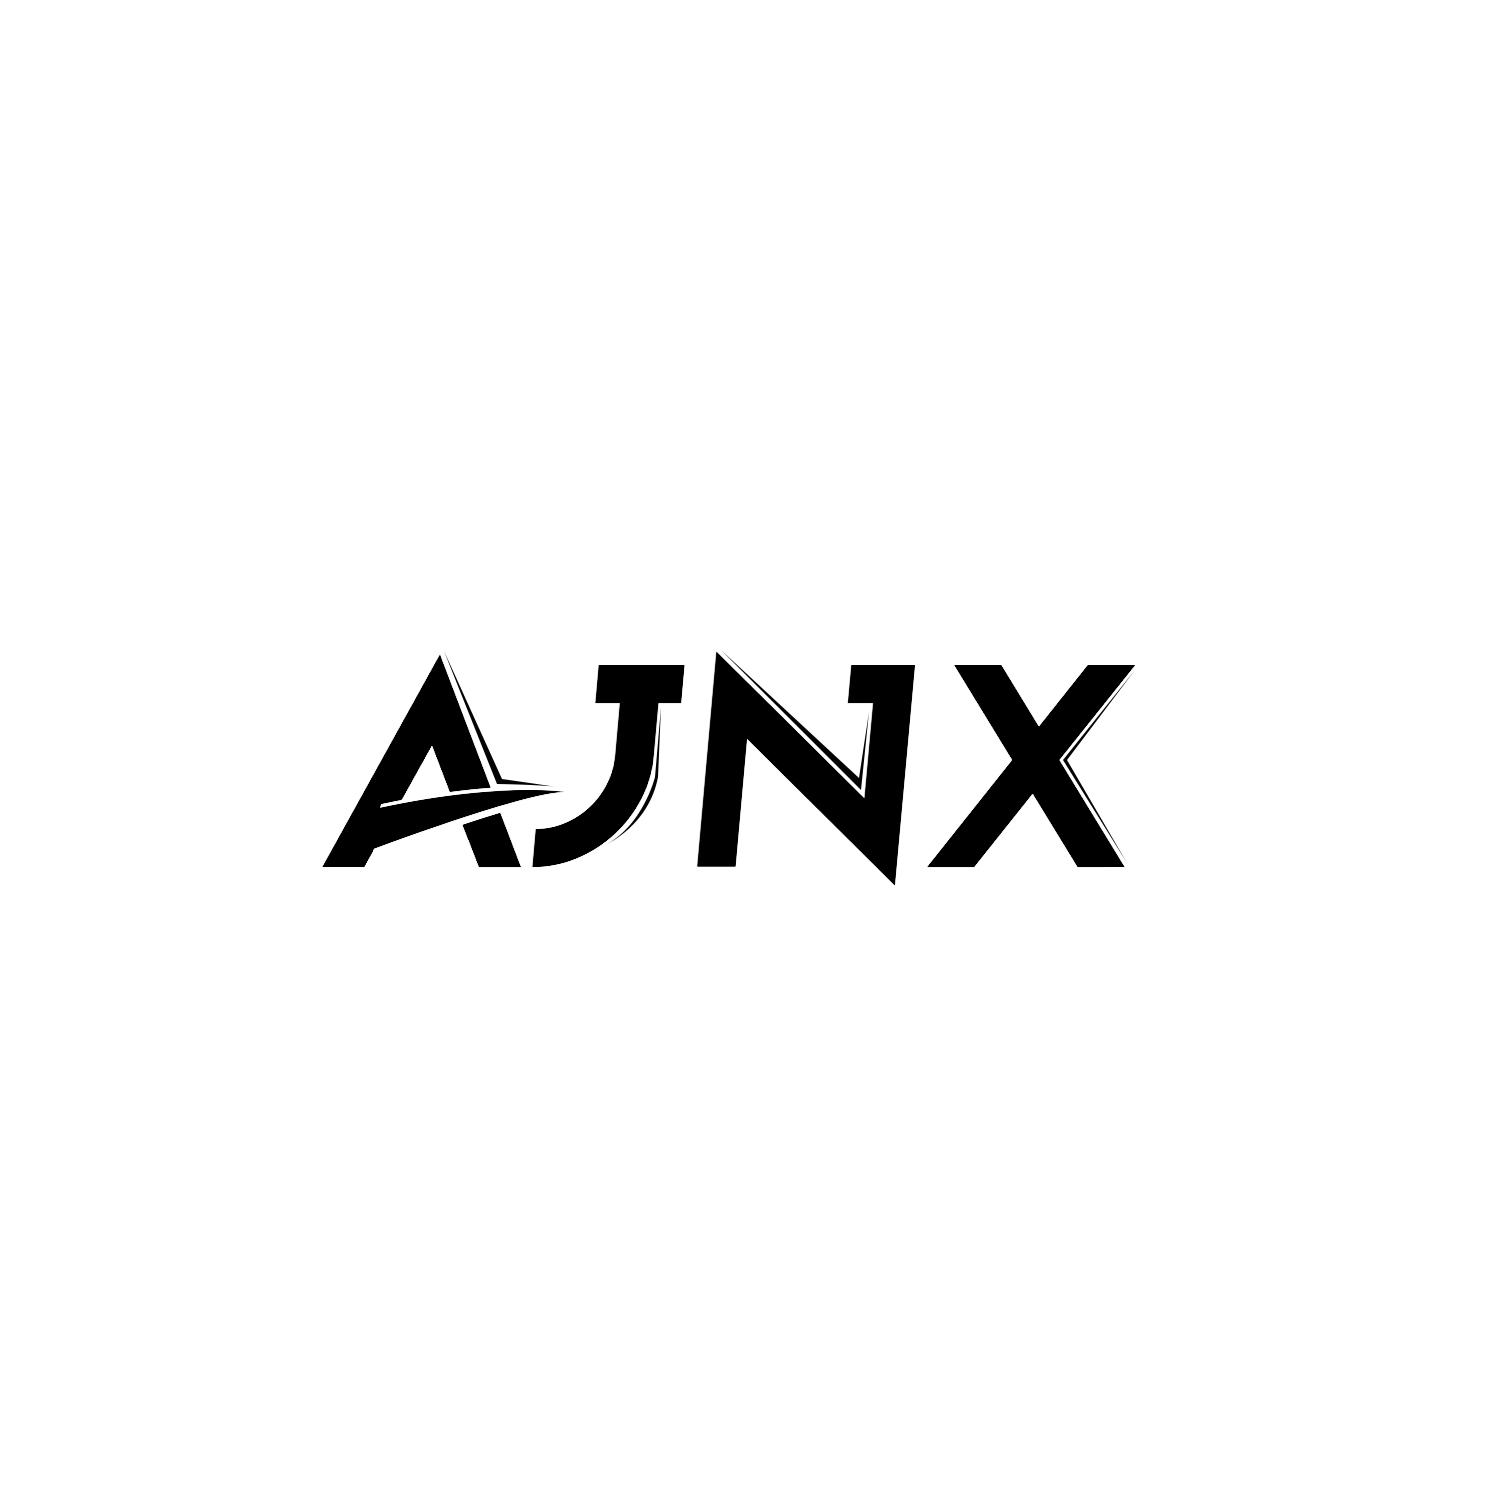 AJNX